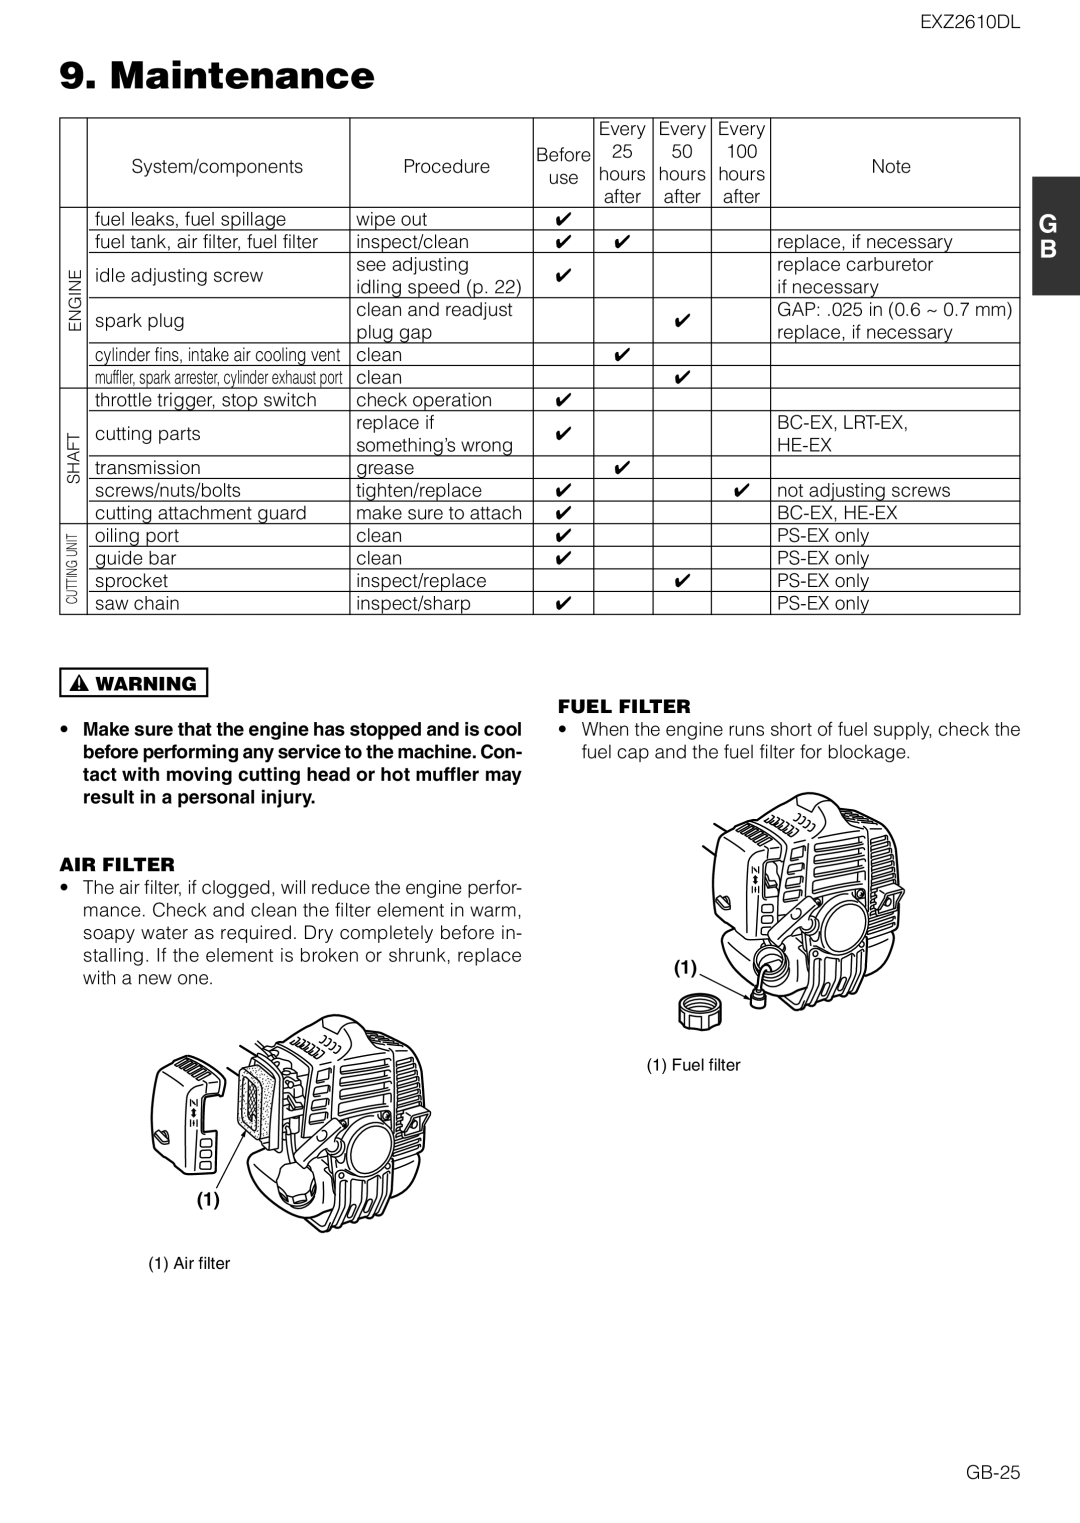 Zenoah EXZ2610DL owner manual Maintenance, Air Filter, Fuel Filter 